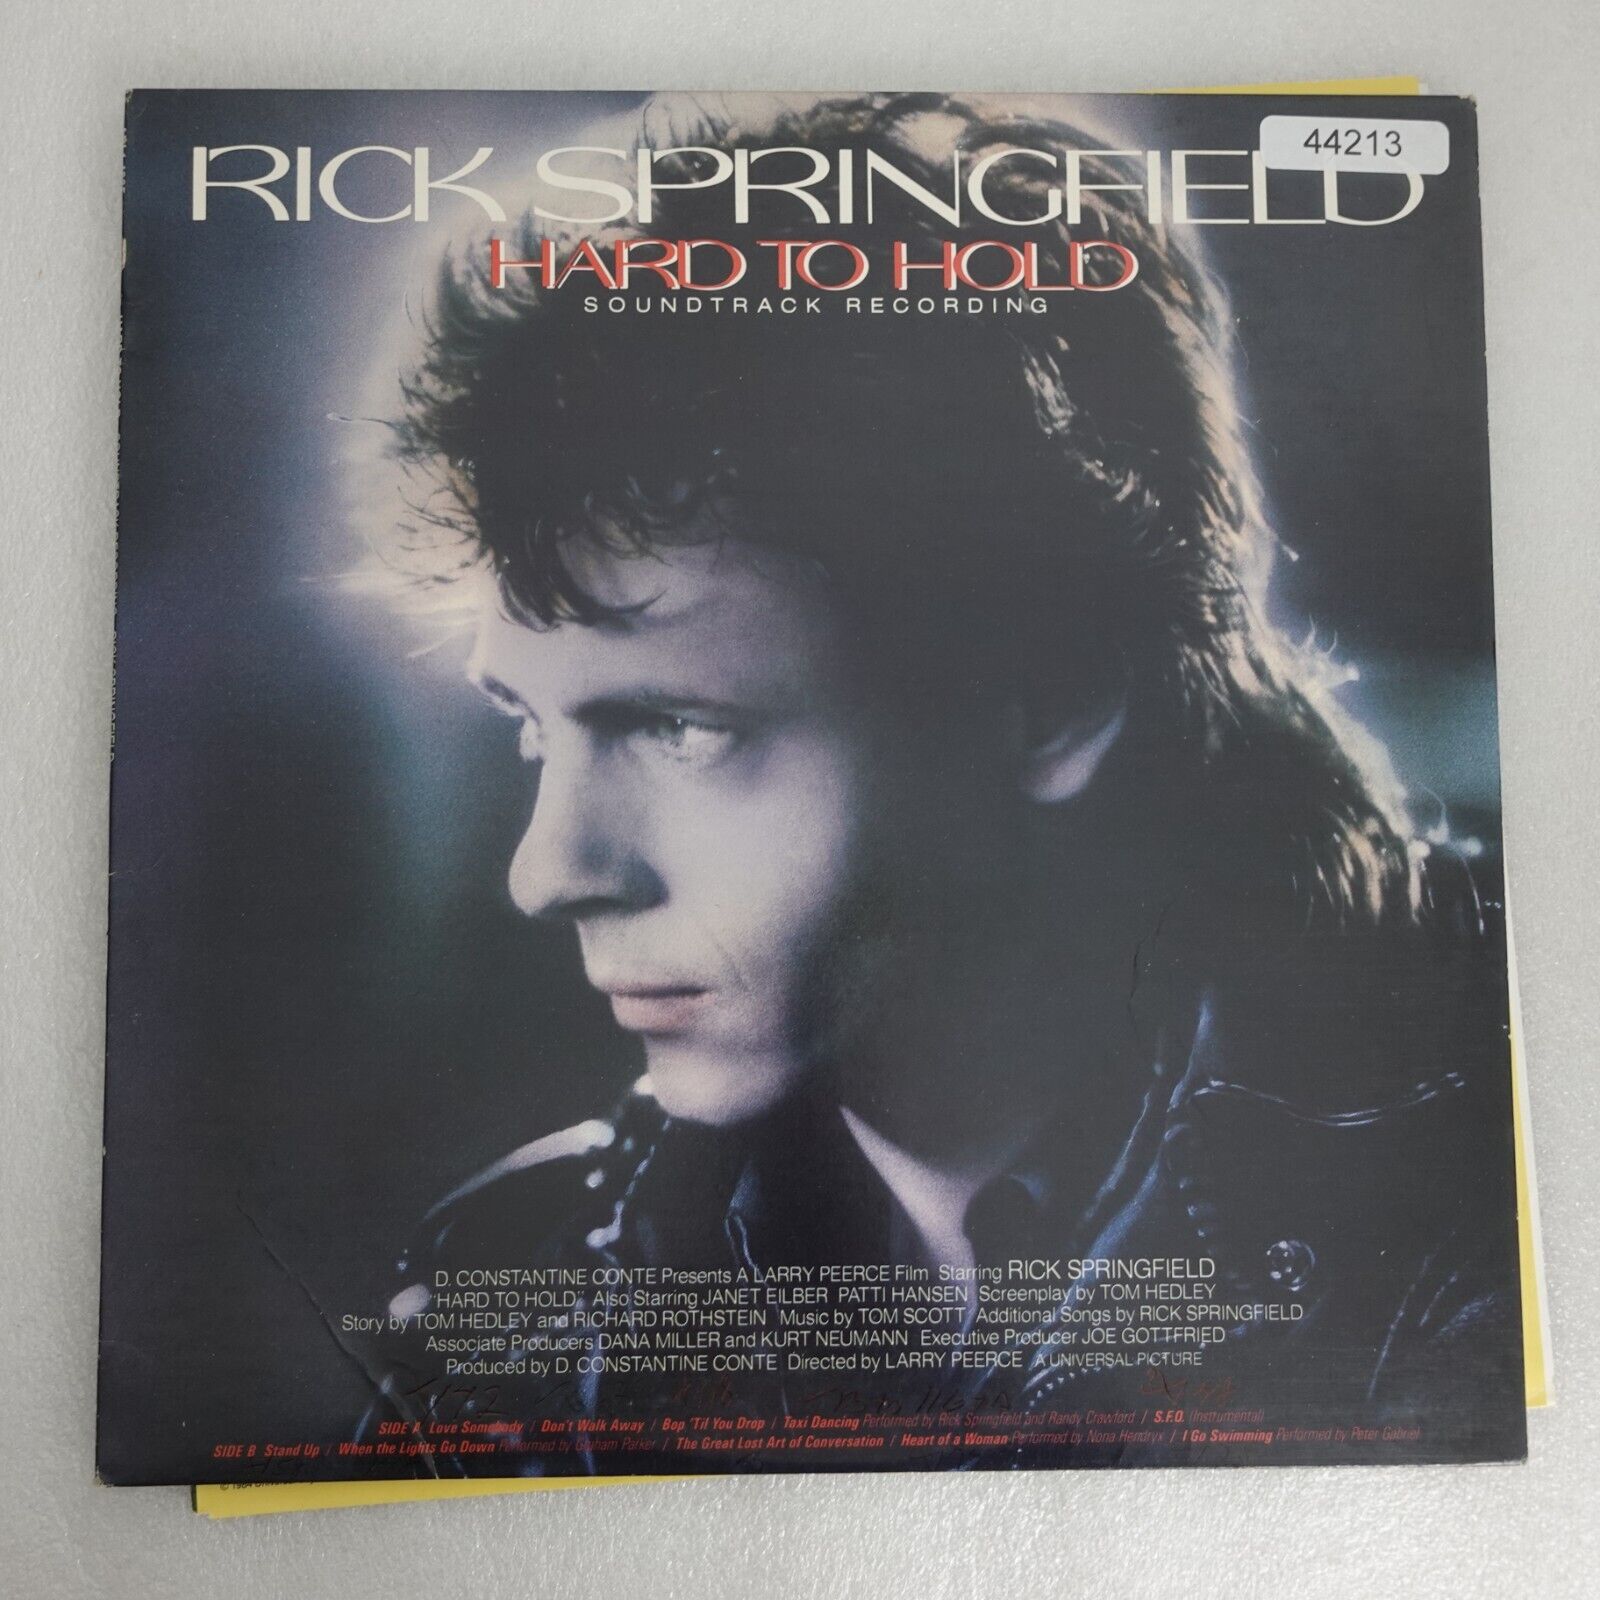 Rick Springfield Hard To Hold Soundtrack LP Vinyl Record Album